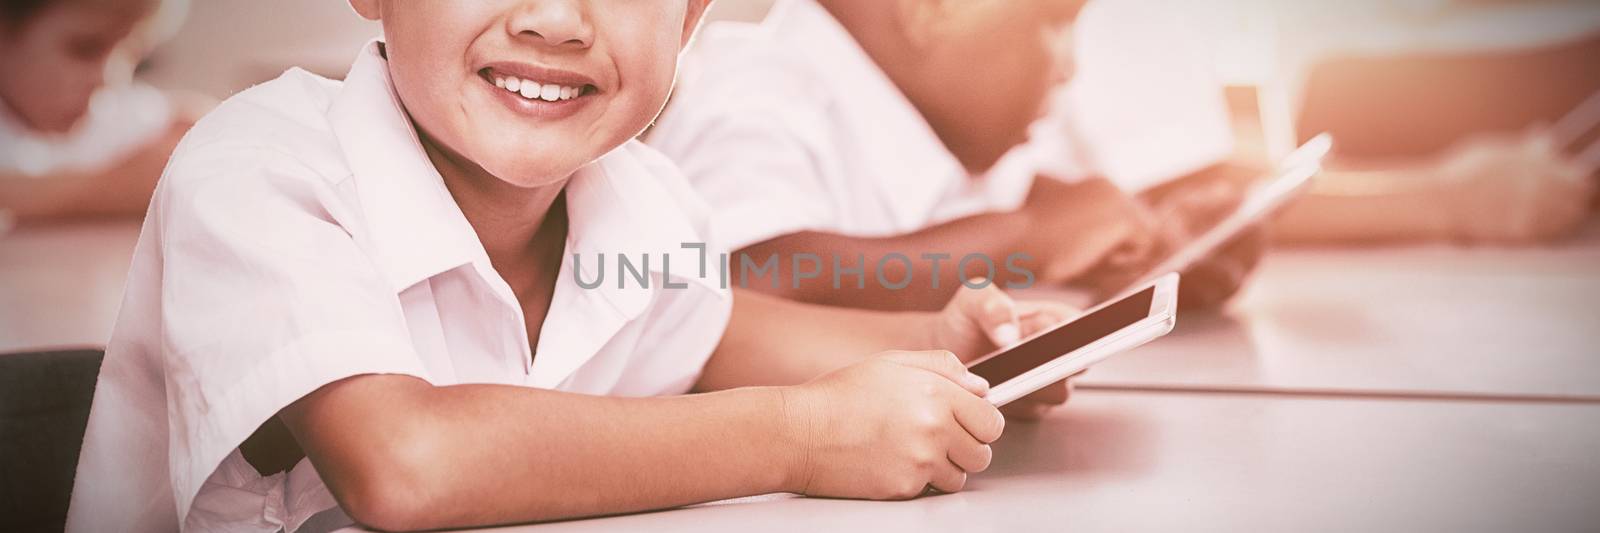 School kids using mobile phone in classroom at school